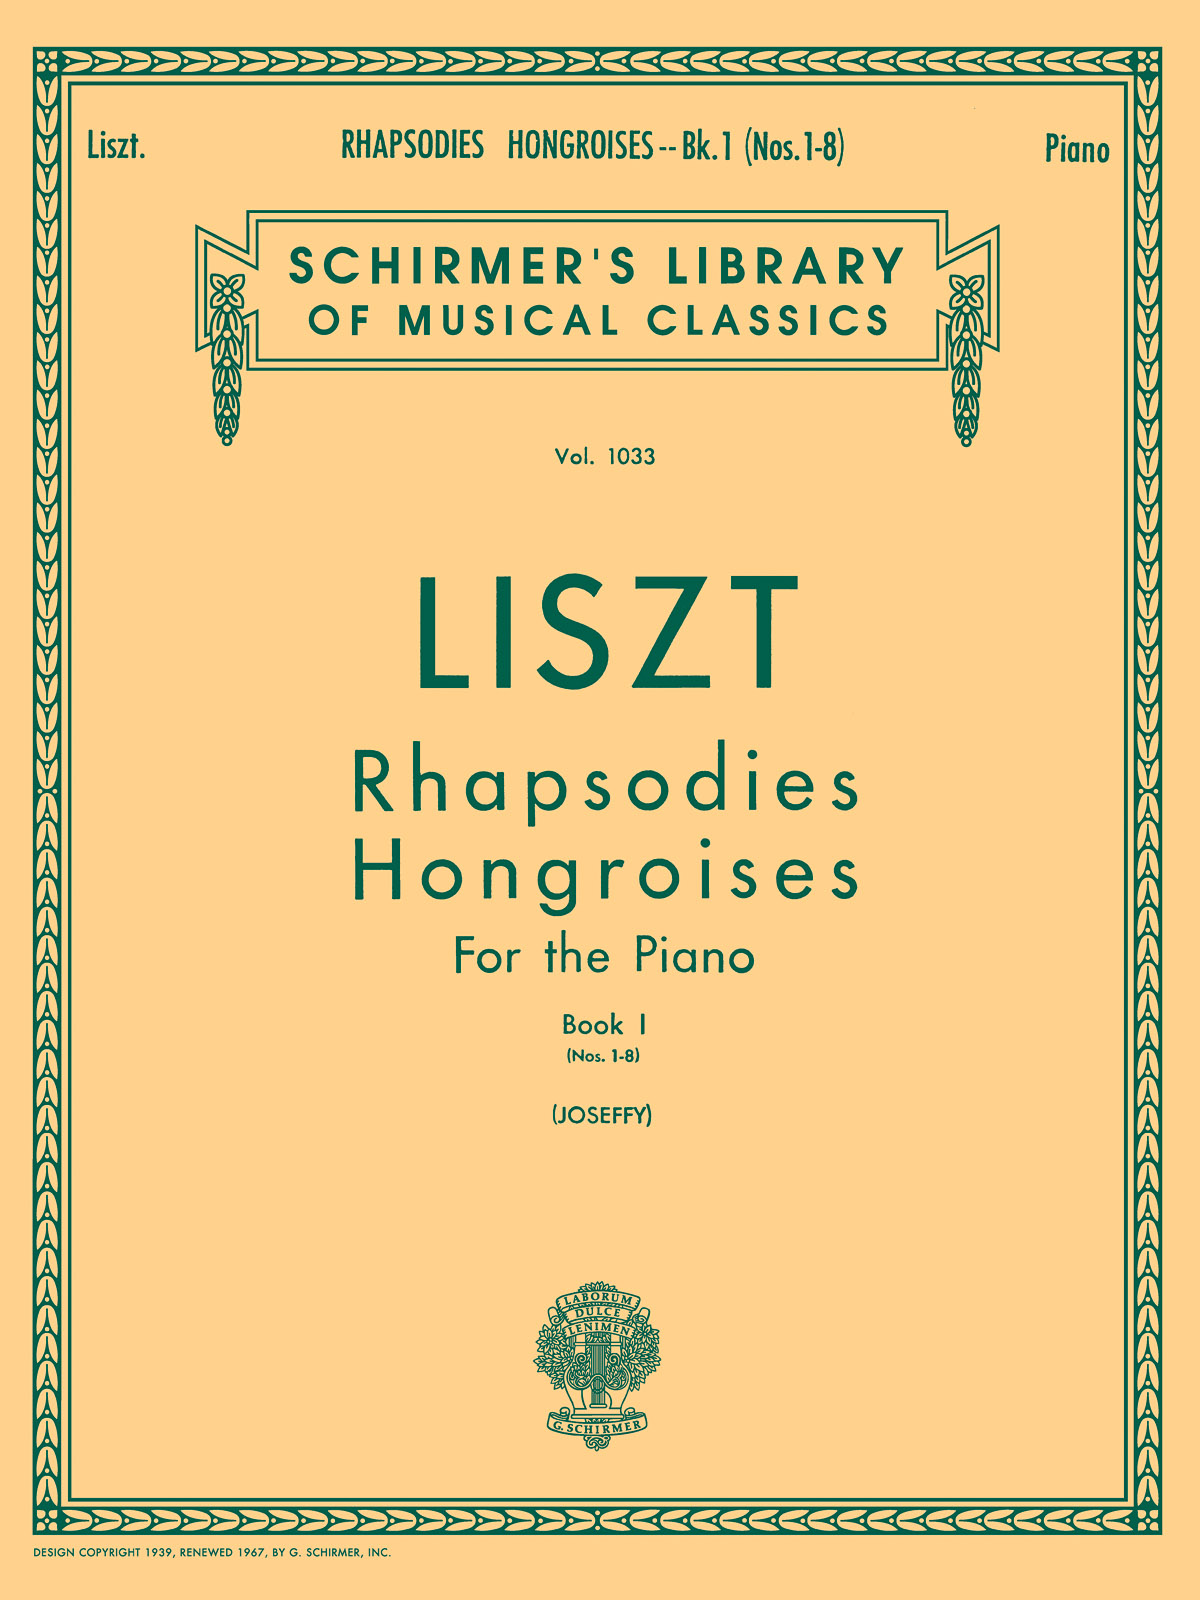 Franz Liszt: Rhapsodies Hongroises Book 1 Nos.1-8